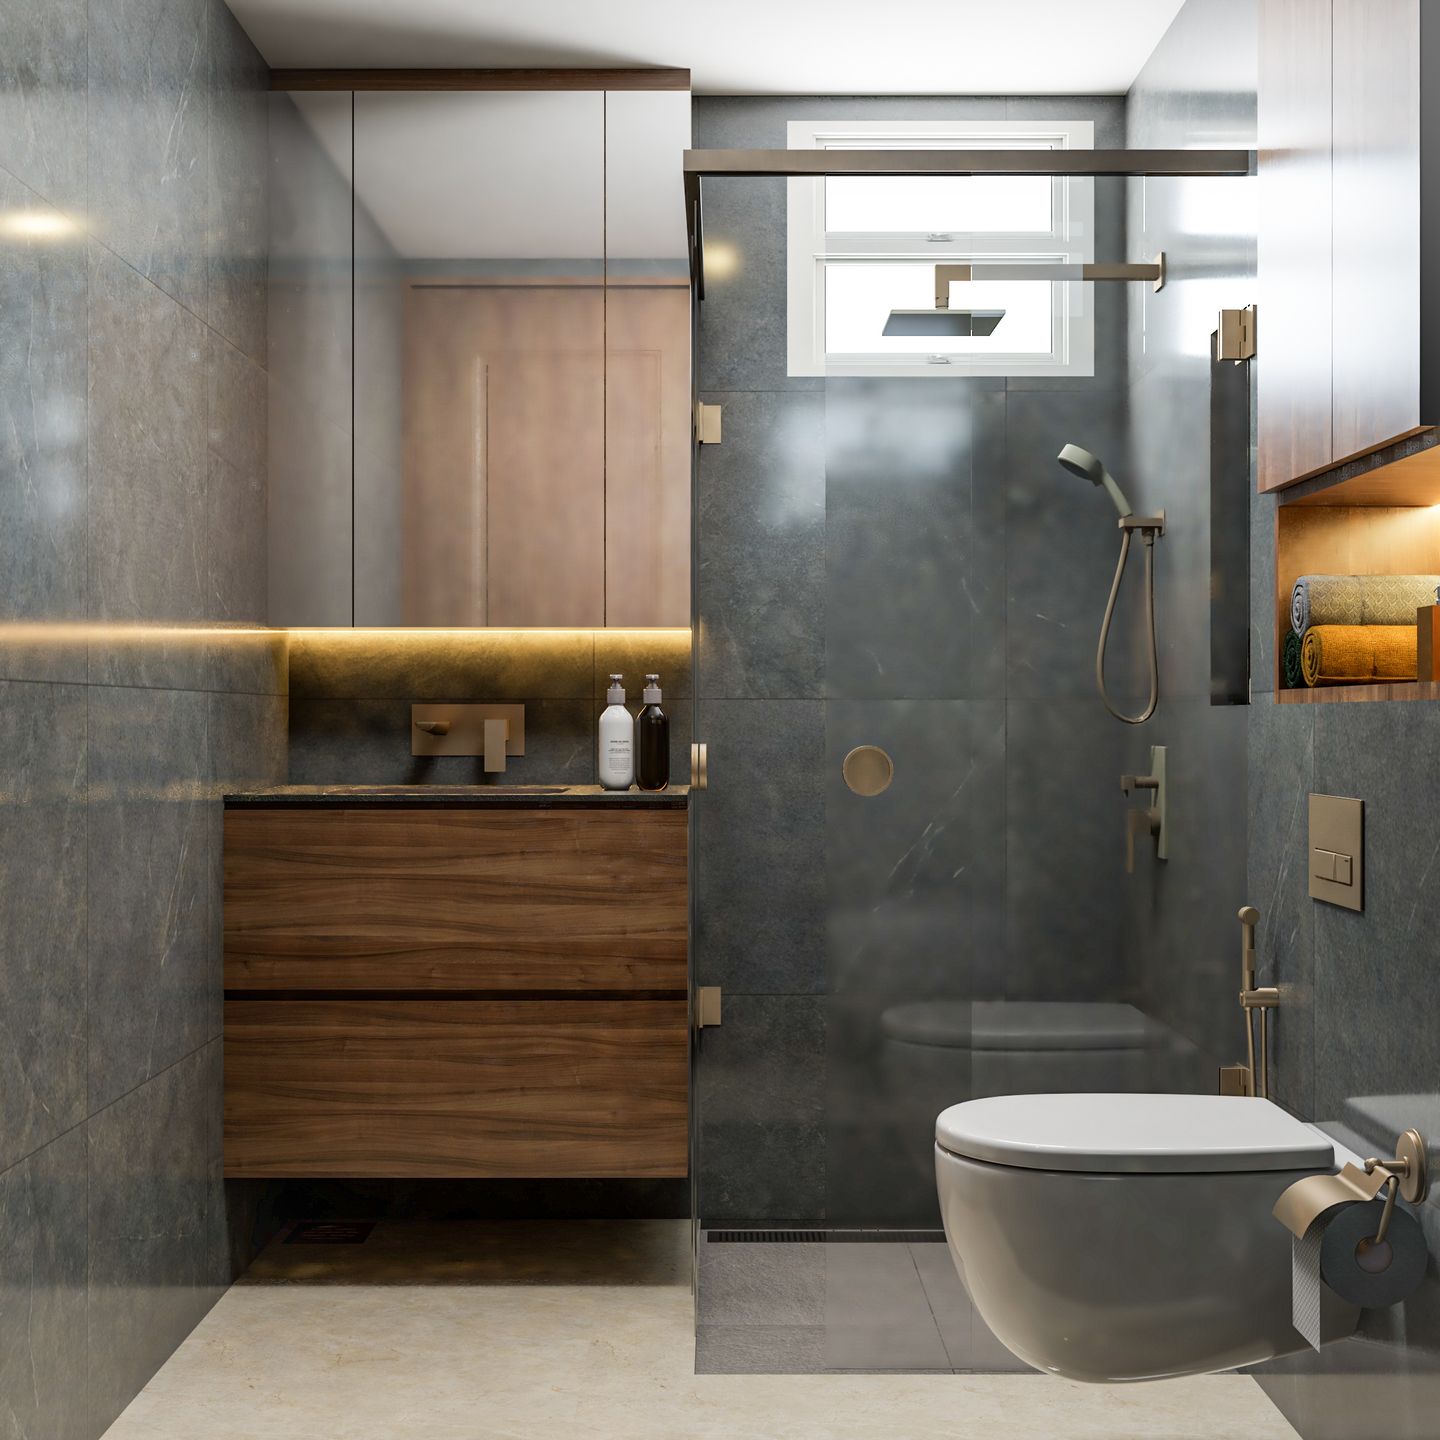 Toilet Design with Wooden Storage - Livspace